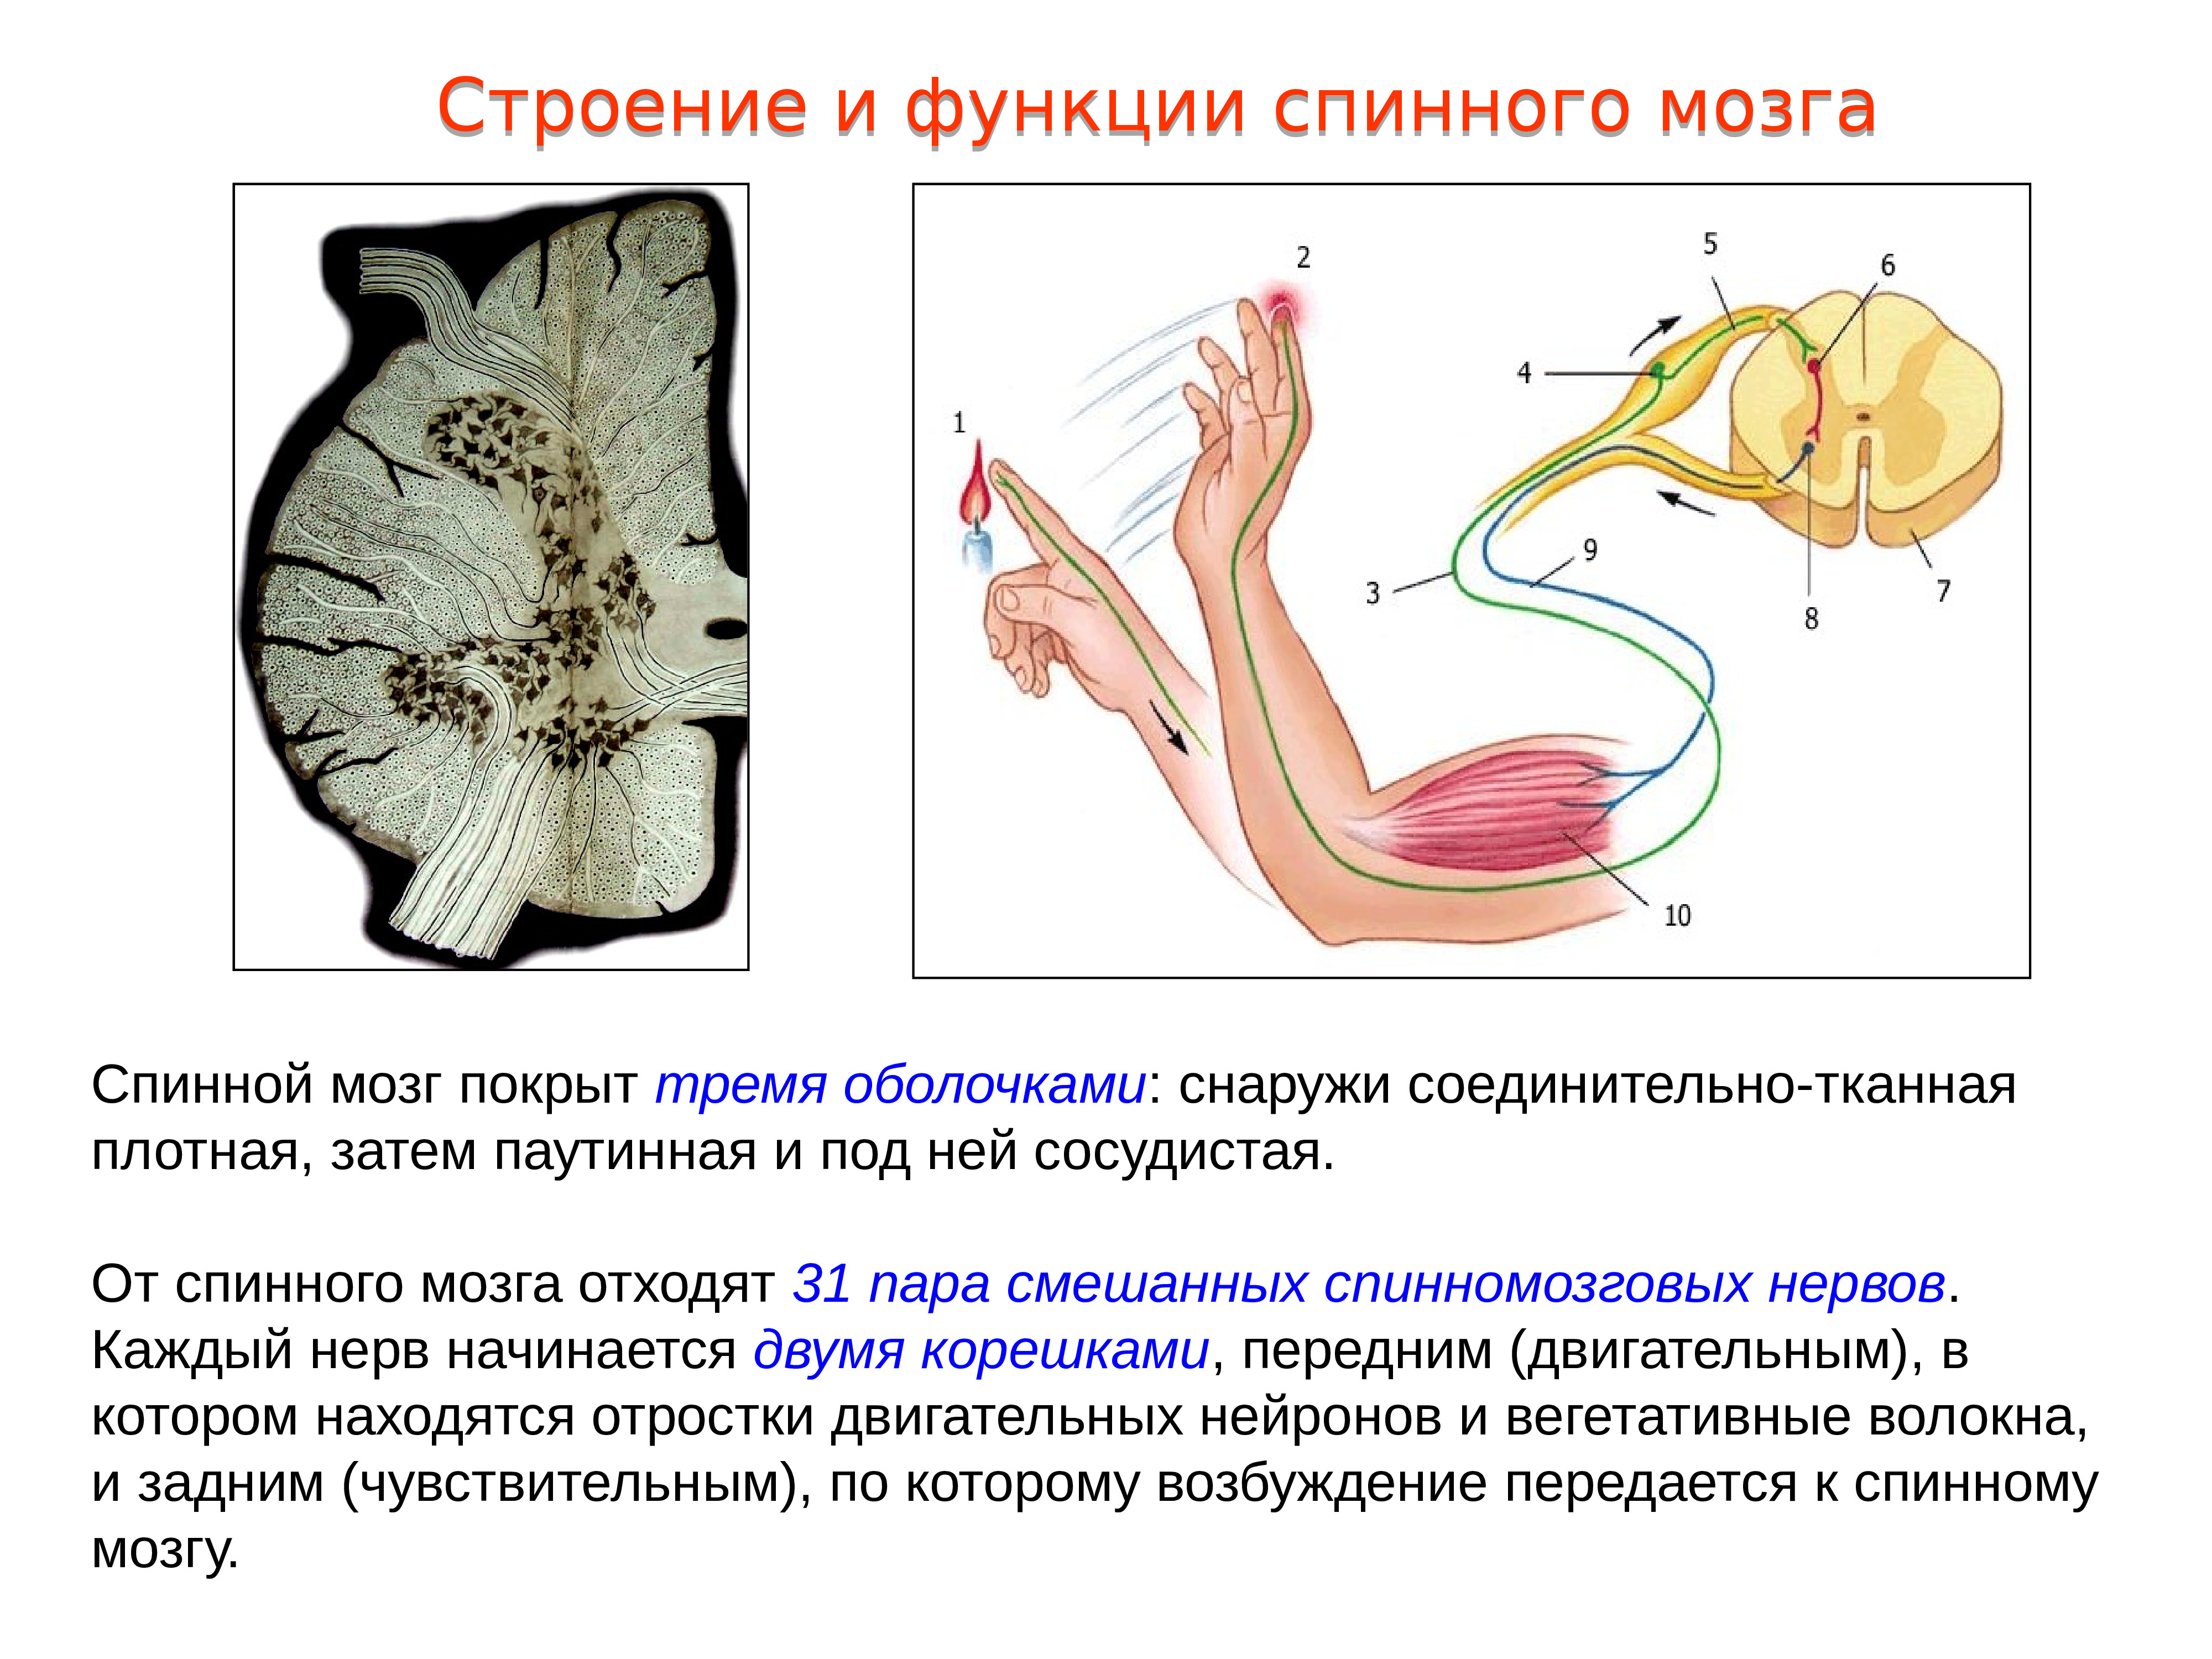 От спинного мозга отходит 31 пара. 1. Строение и функции спинного мозга.. 2. Строение и функции спинного мозга. 16. Строение и функции спинного мозга. Охарактеризуйте строение и функции спинного мозга.